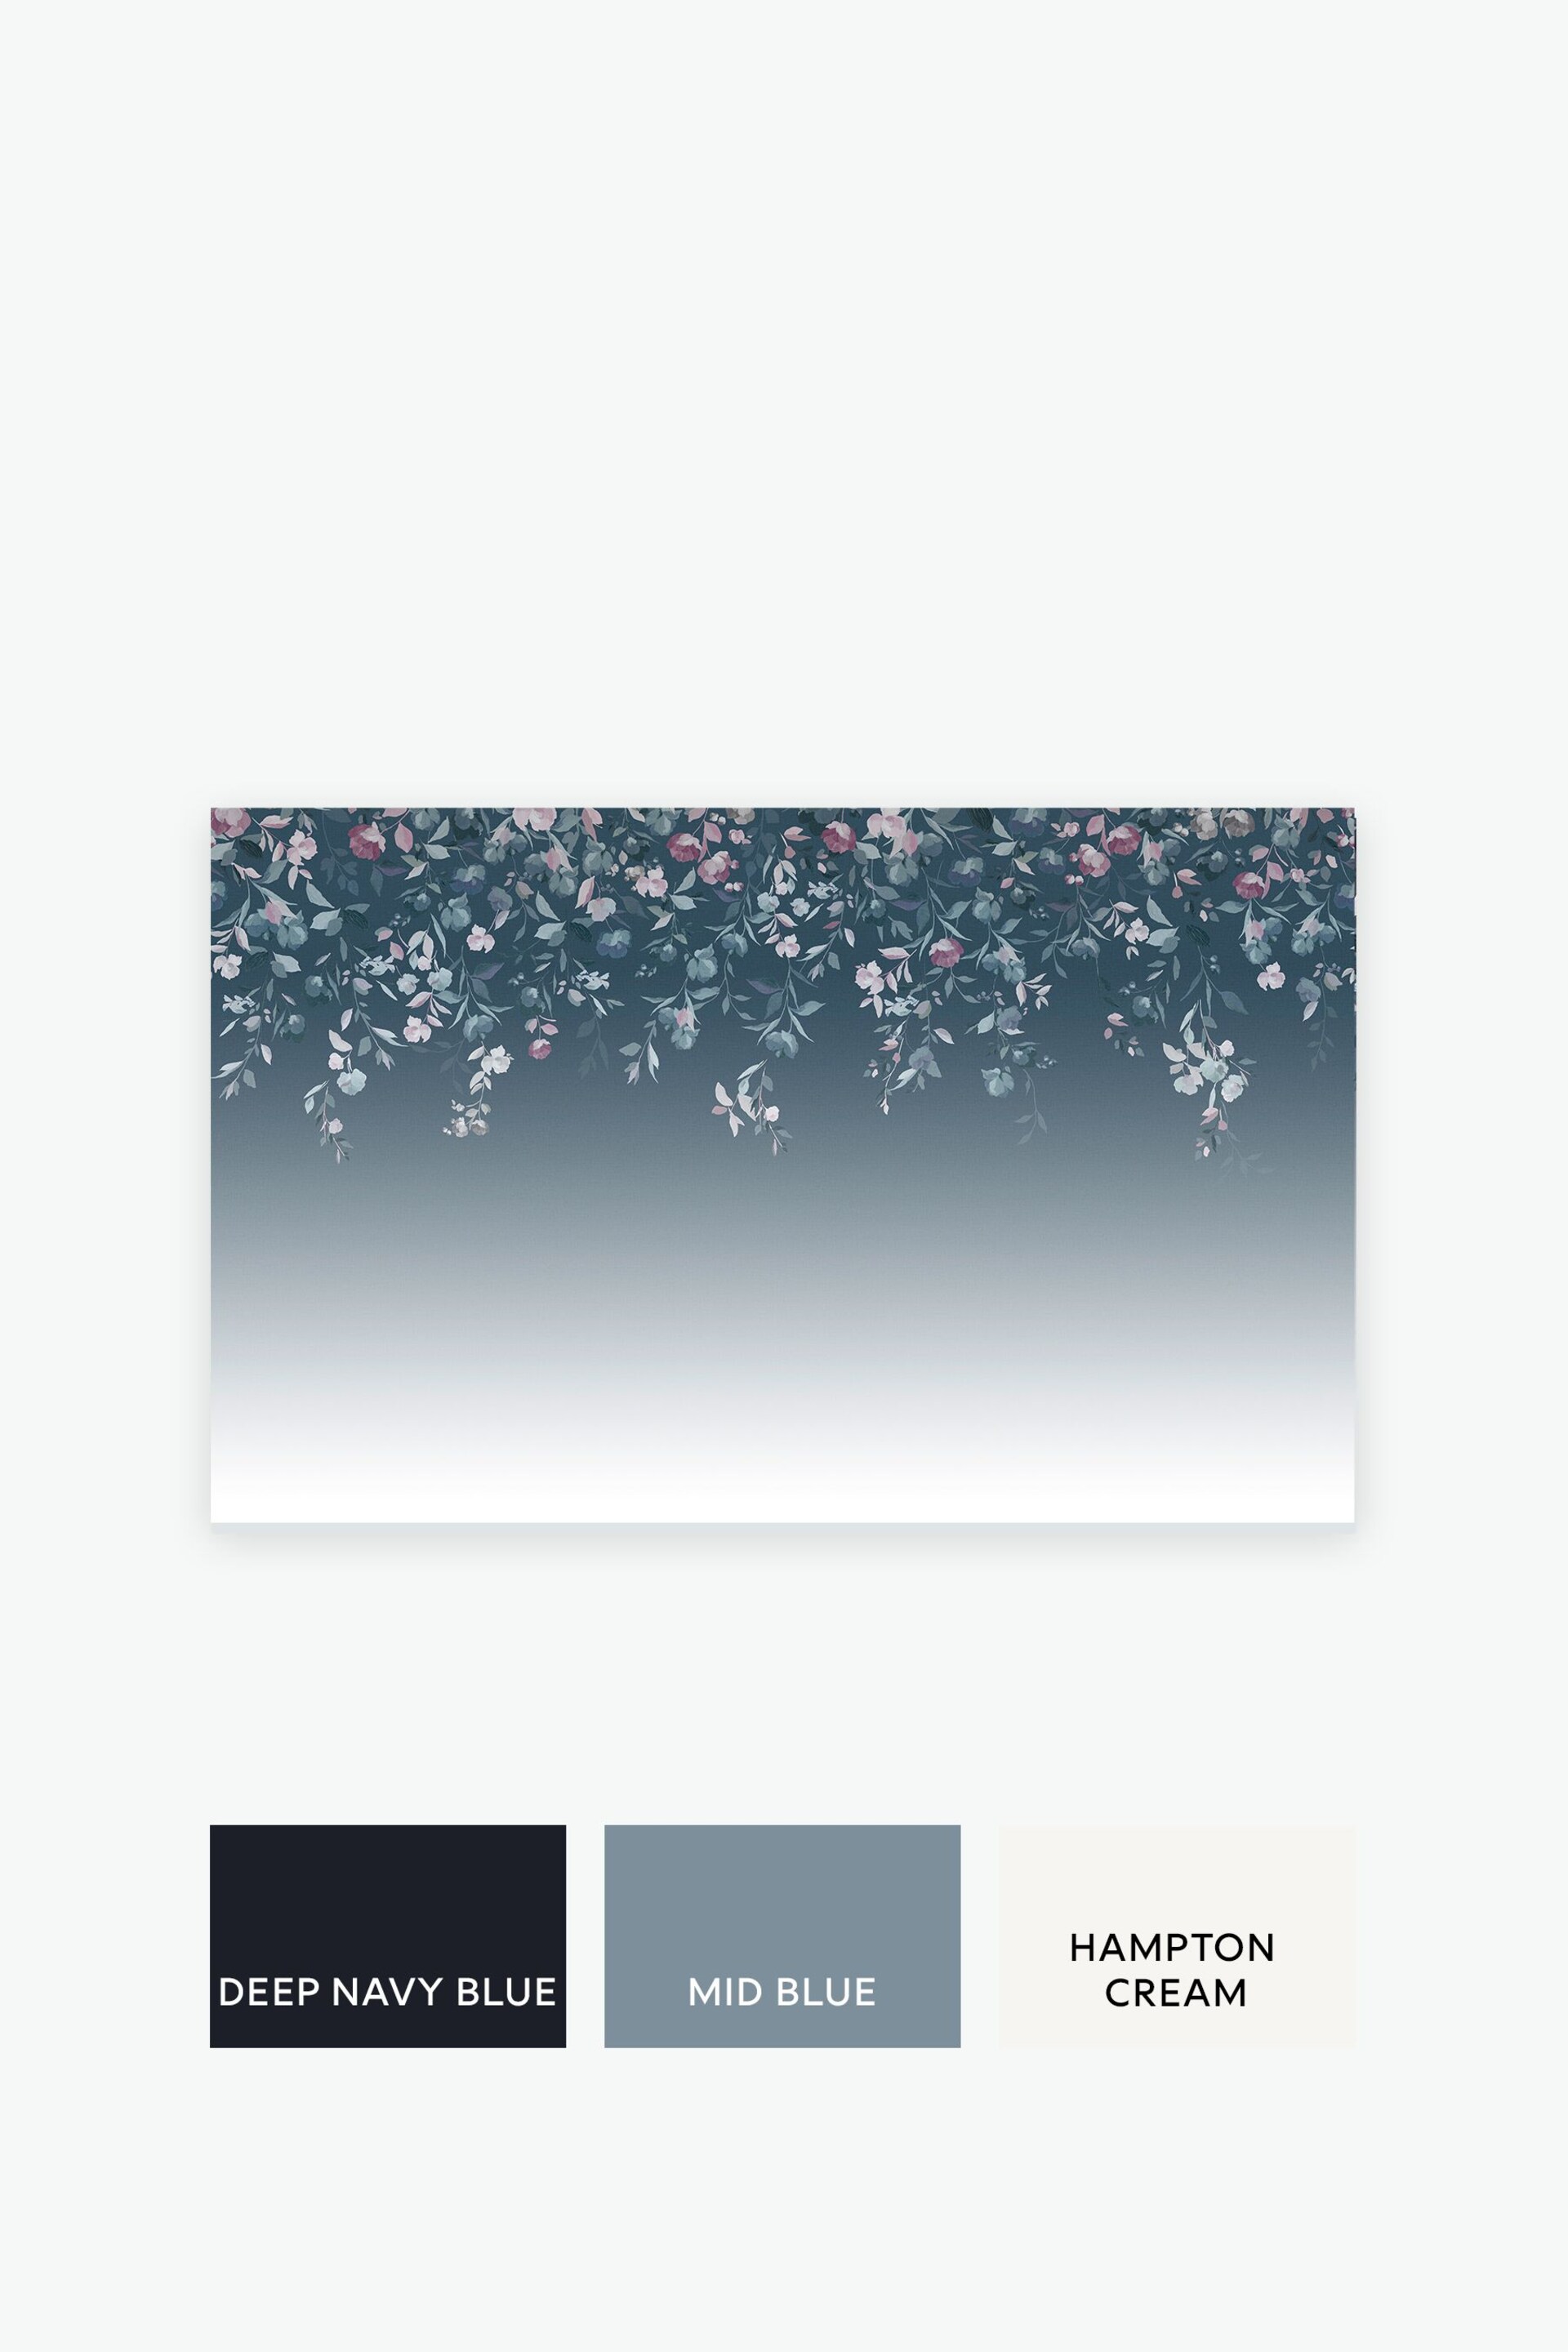 Slate Grey Restore Floral Mural Wallpaper - Image 2 of 3